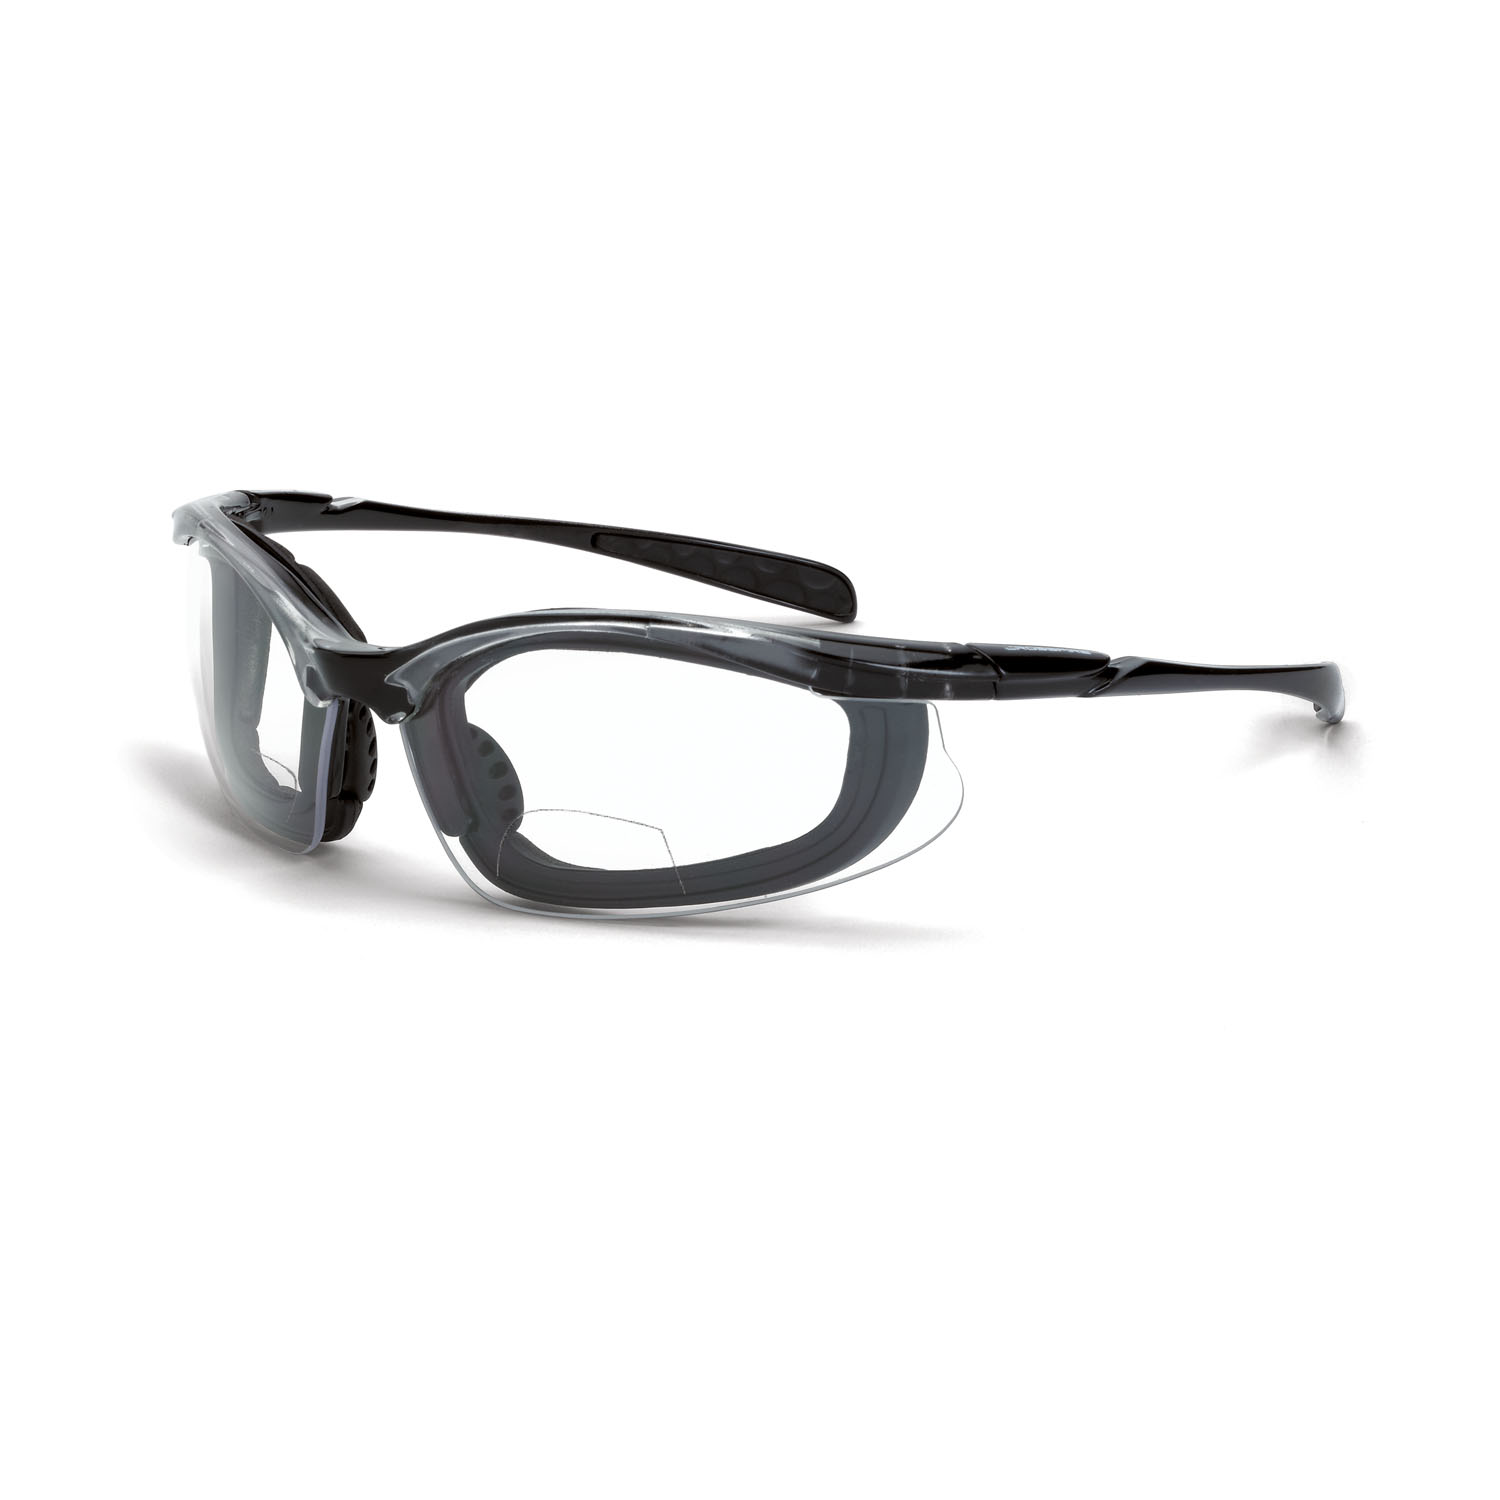 Concept Foam Lined Bifocal Safety Eyewear - Crystal Black Frame - Clear Lens - 2.0 Diopter